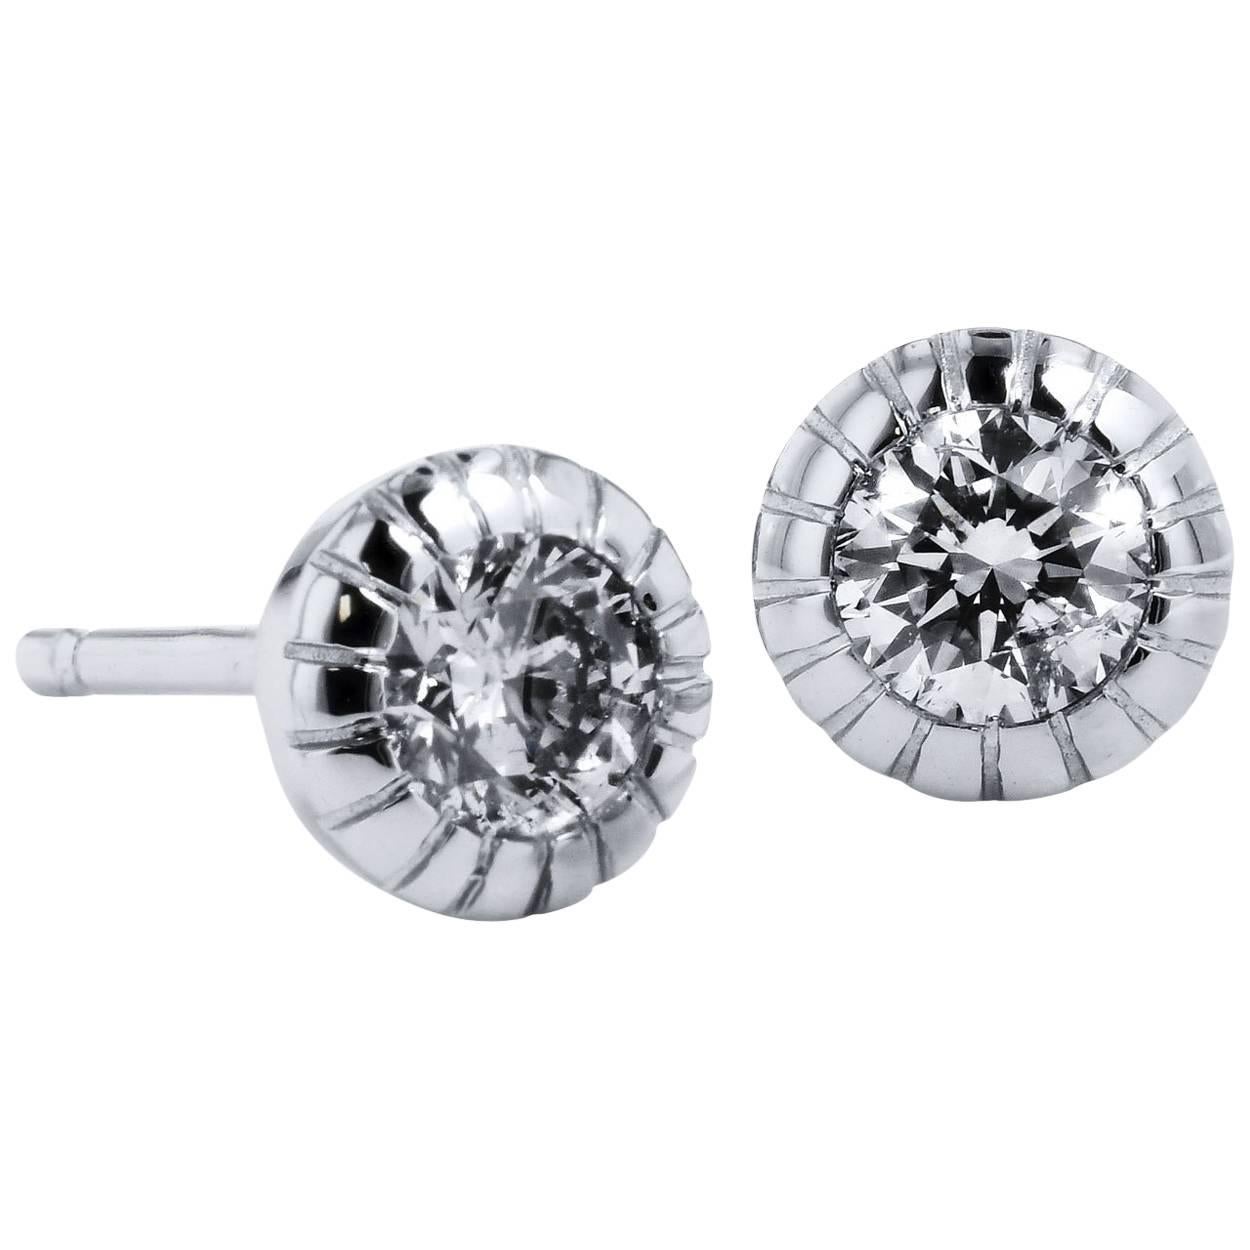 H & H 0.39 Carat Diamond Ten Prong Bezel Set Stud Earrings